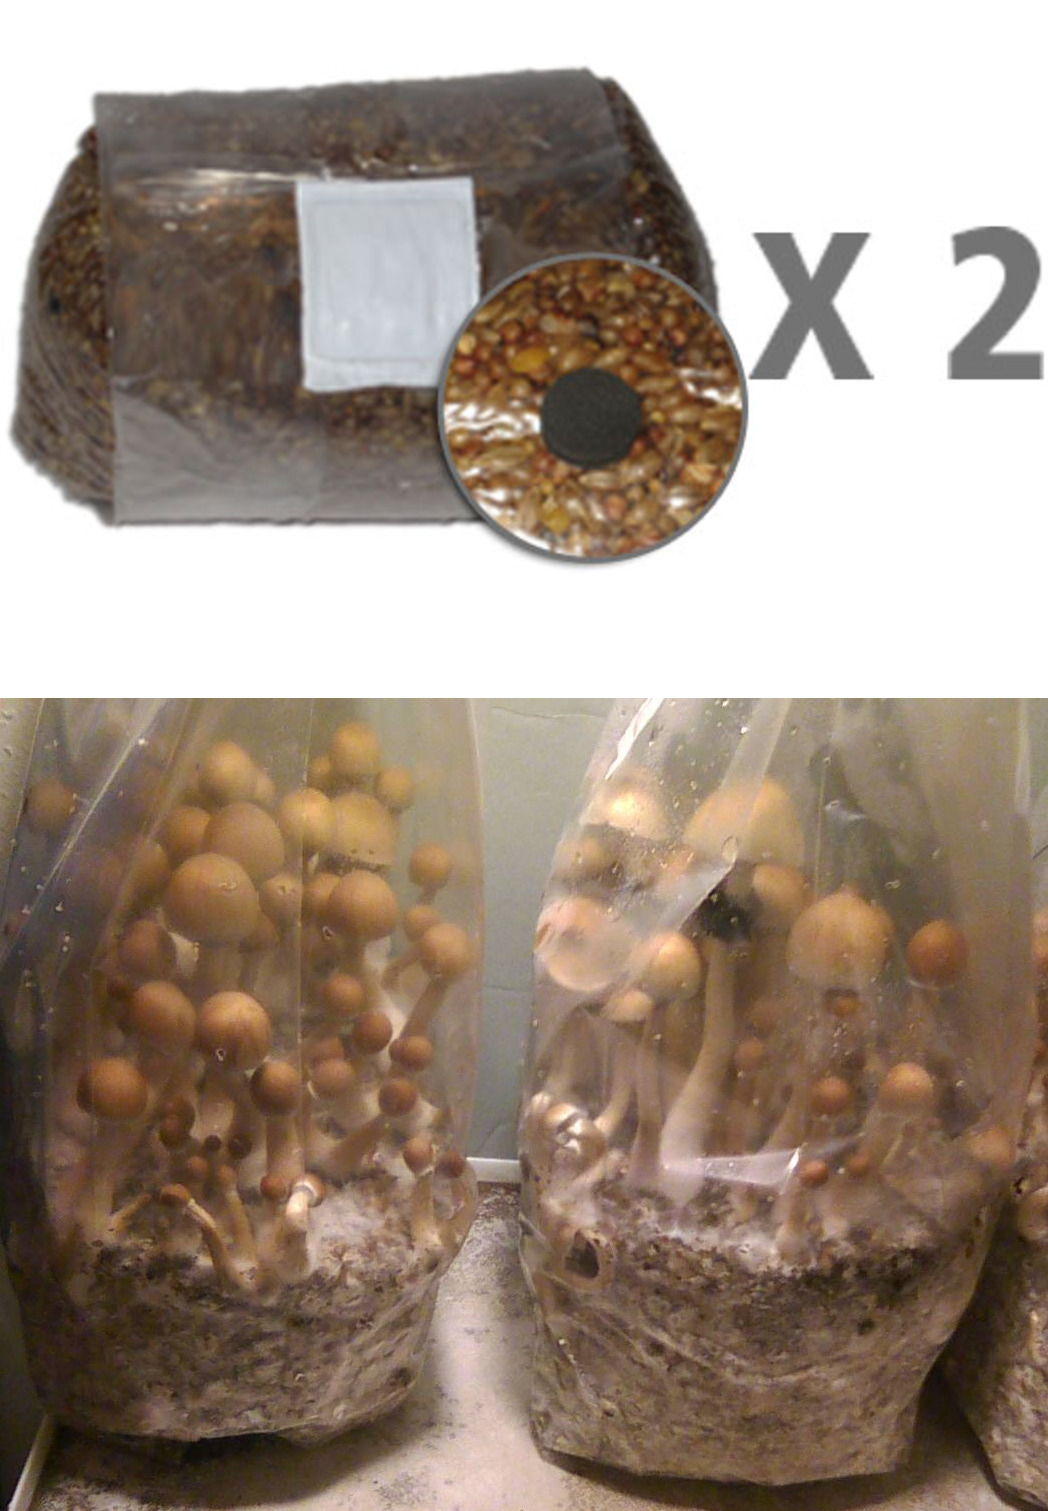 Myco Bags Mushroom Cultivation Grow kit bag 10 QTY Large Size 8 x 5 x 19 Spawn 